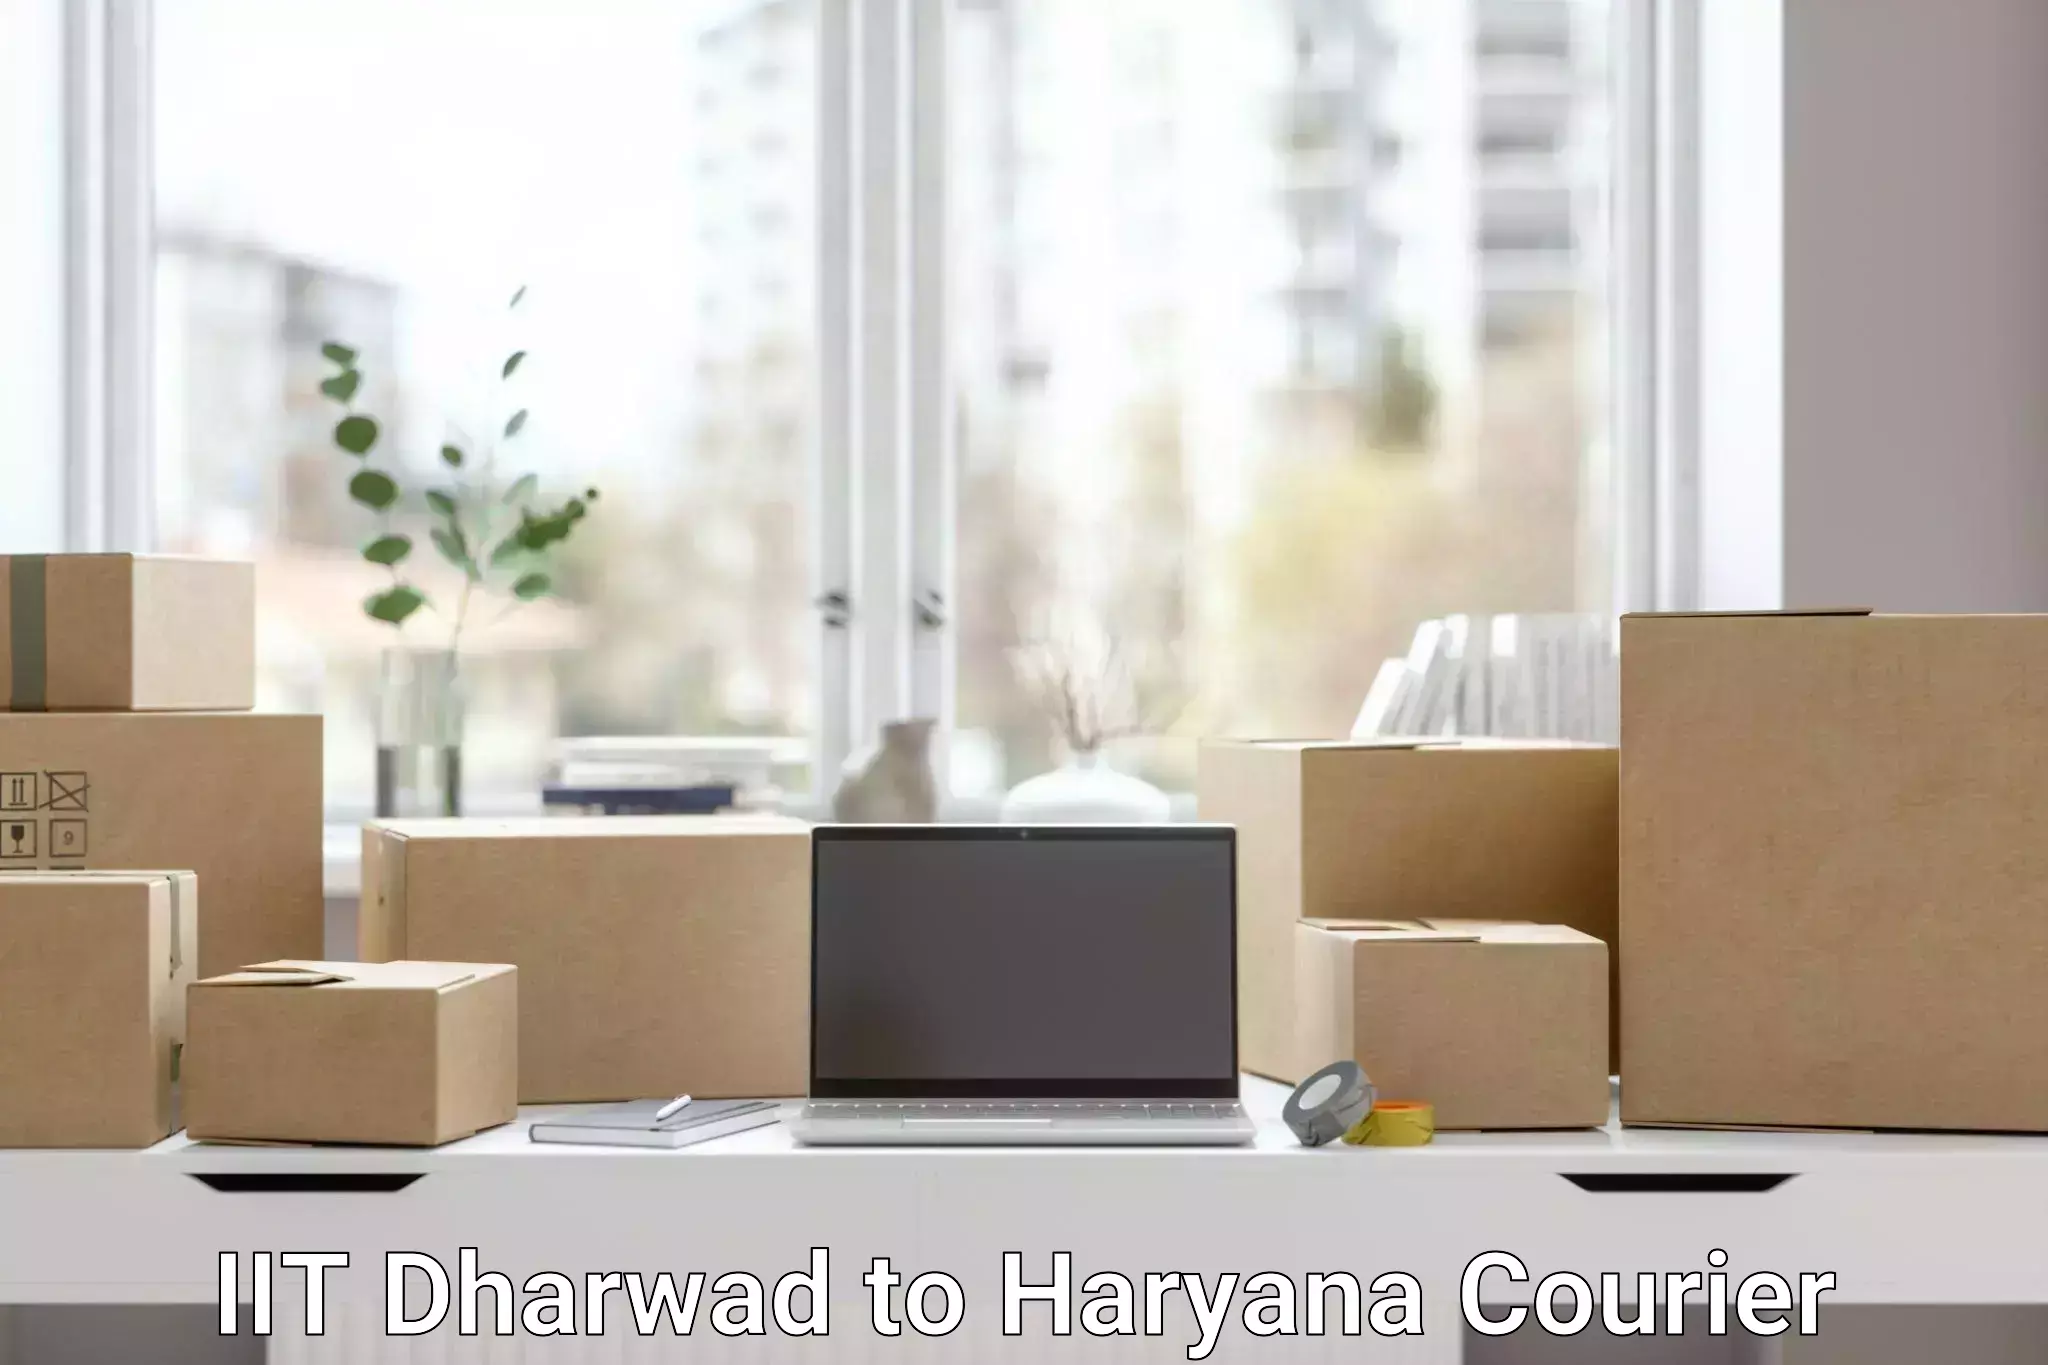 Express mail service IIT Dharwad to Haryana